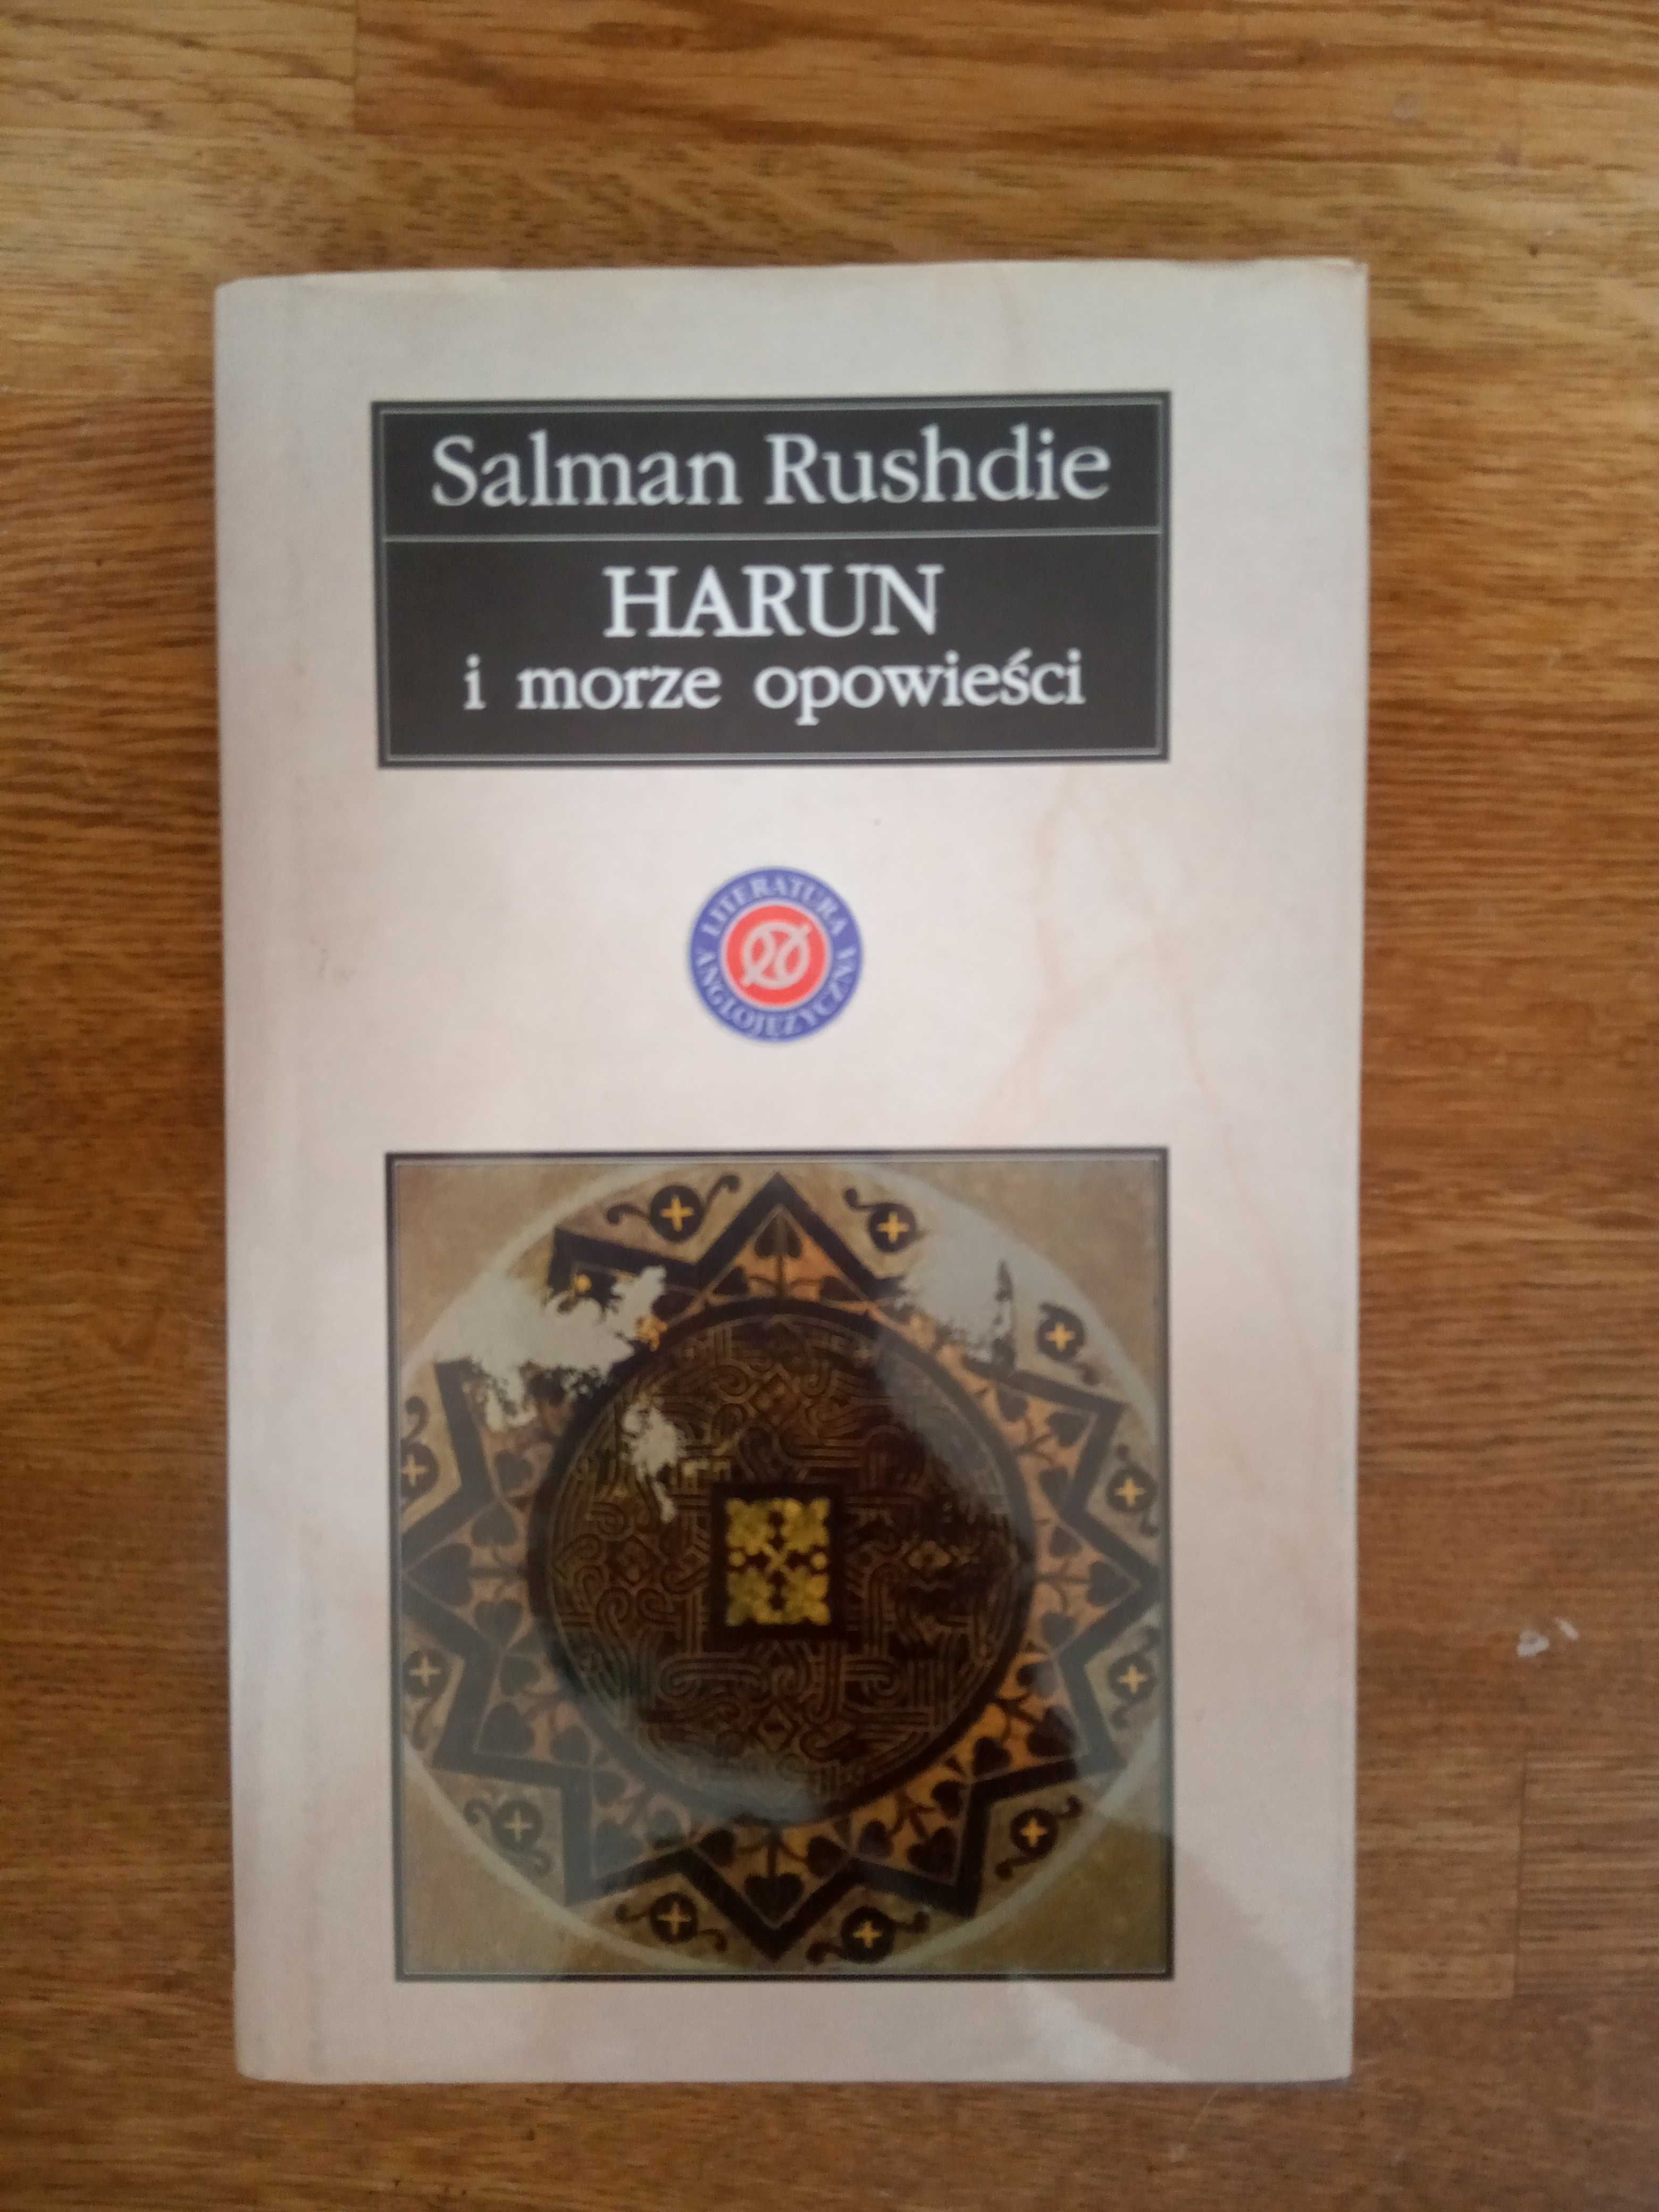 Harun i morze opowieści Salman Rushdie